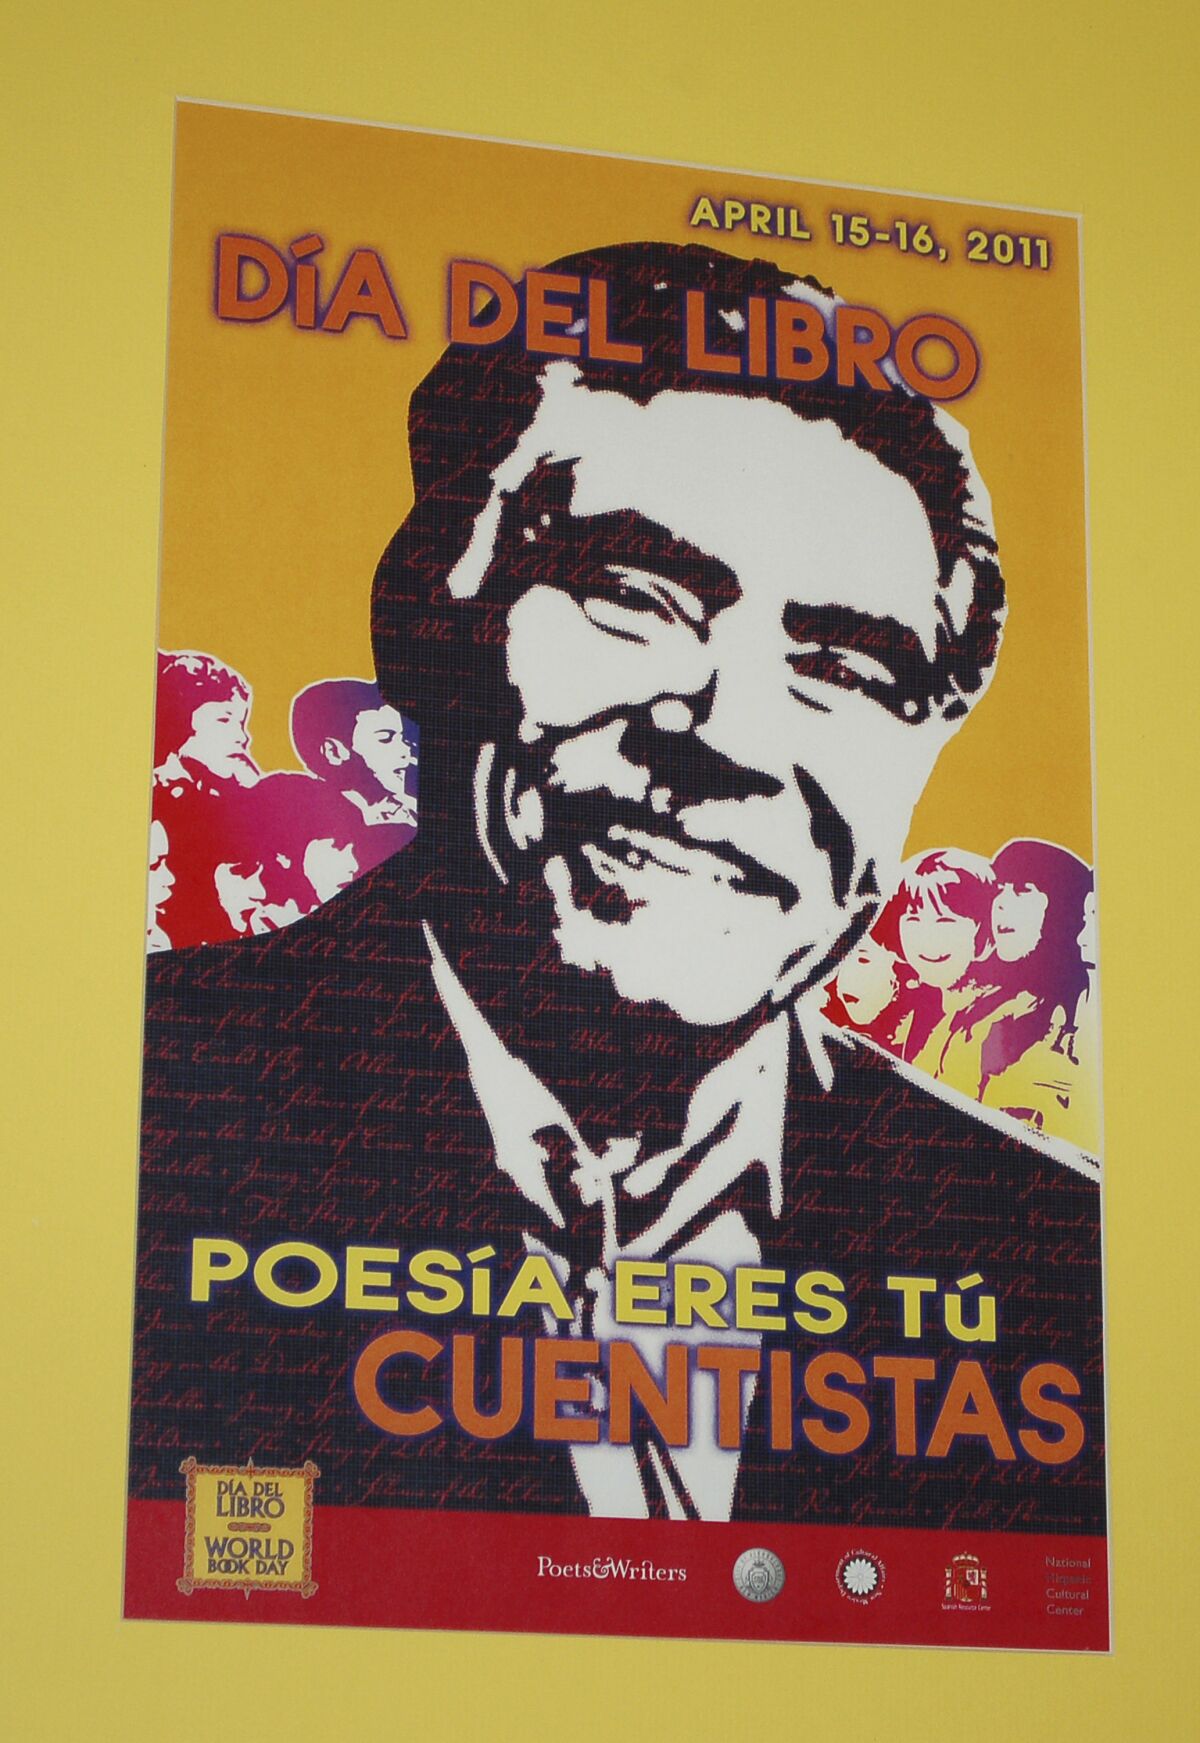 A poster of the late novelist Rudolfo Anaya, the doyen of Chicano literature